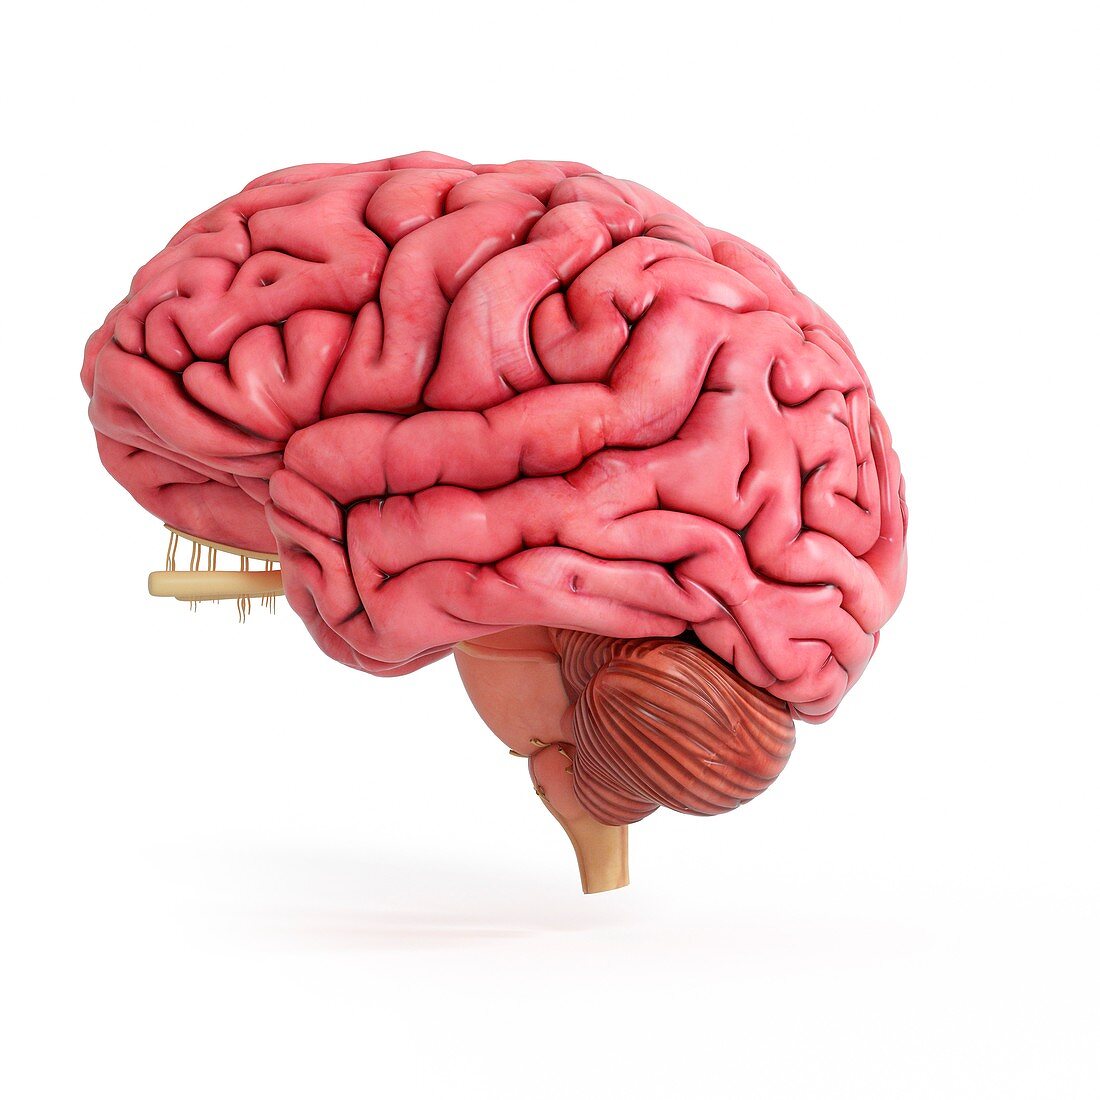 Illustration of a realistic human brain